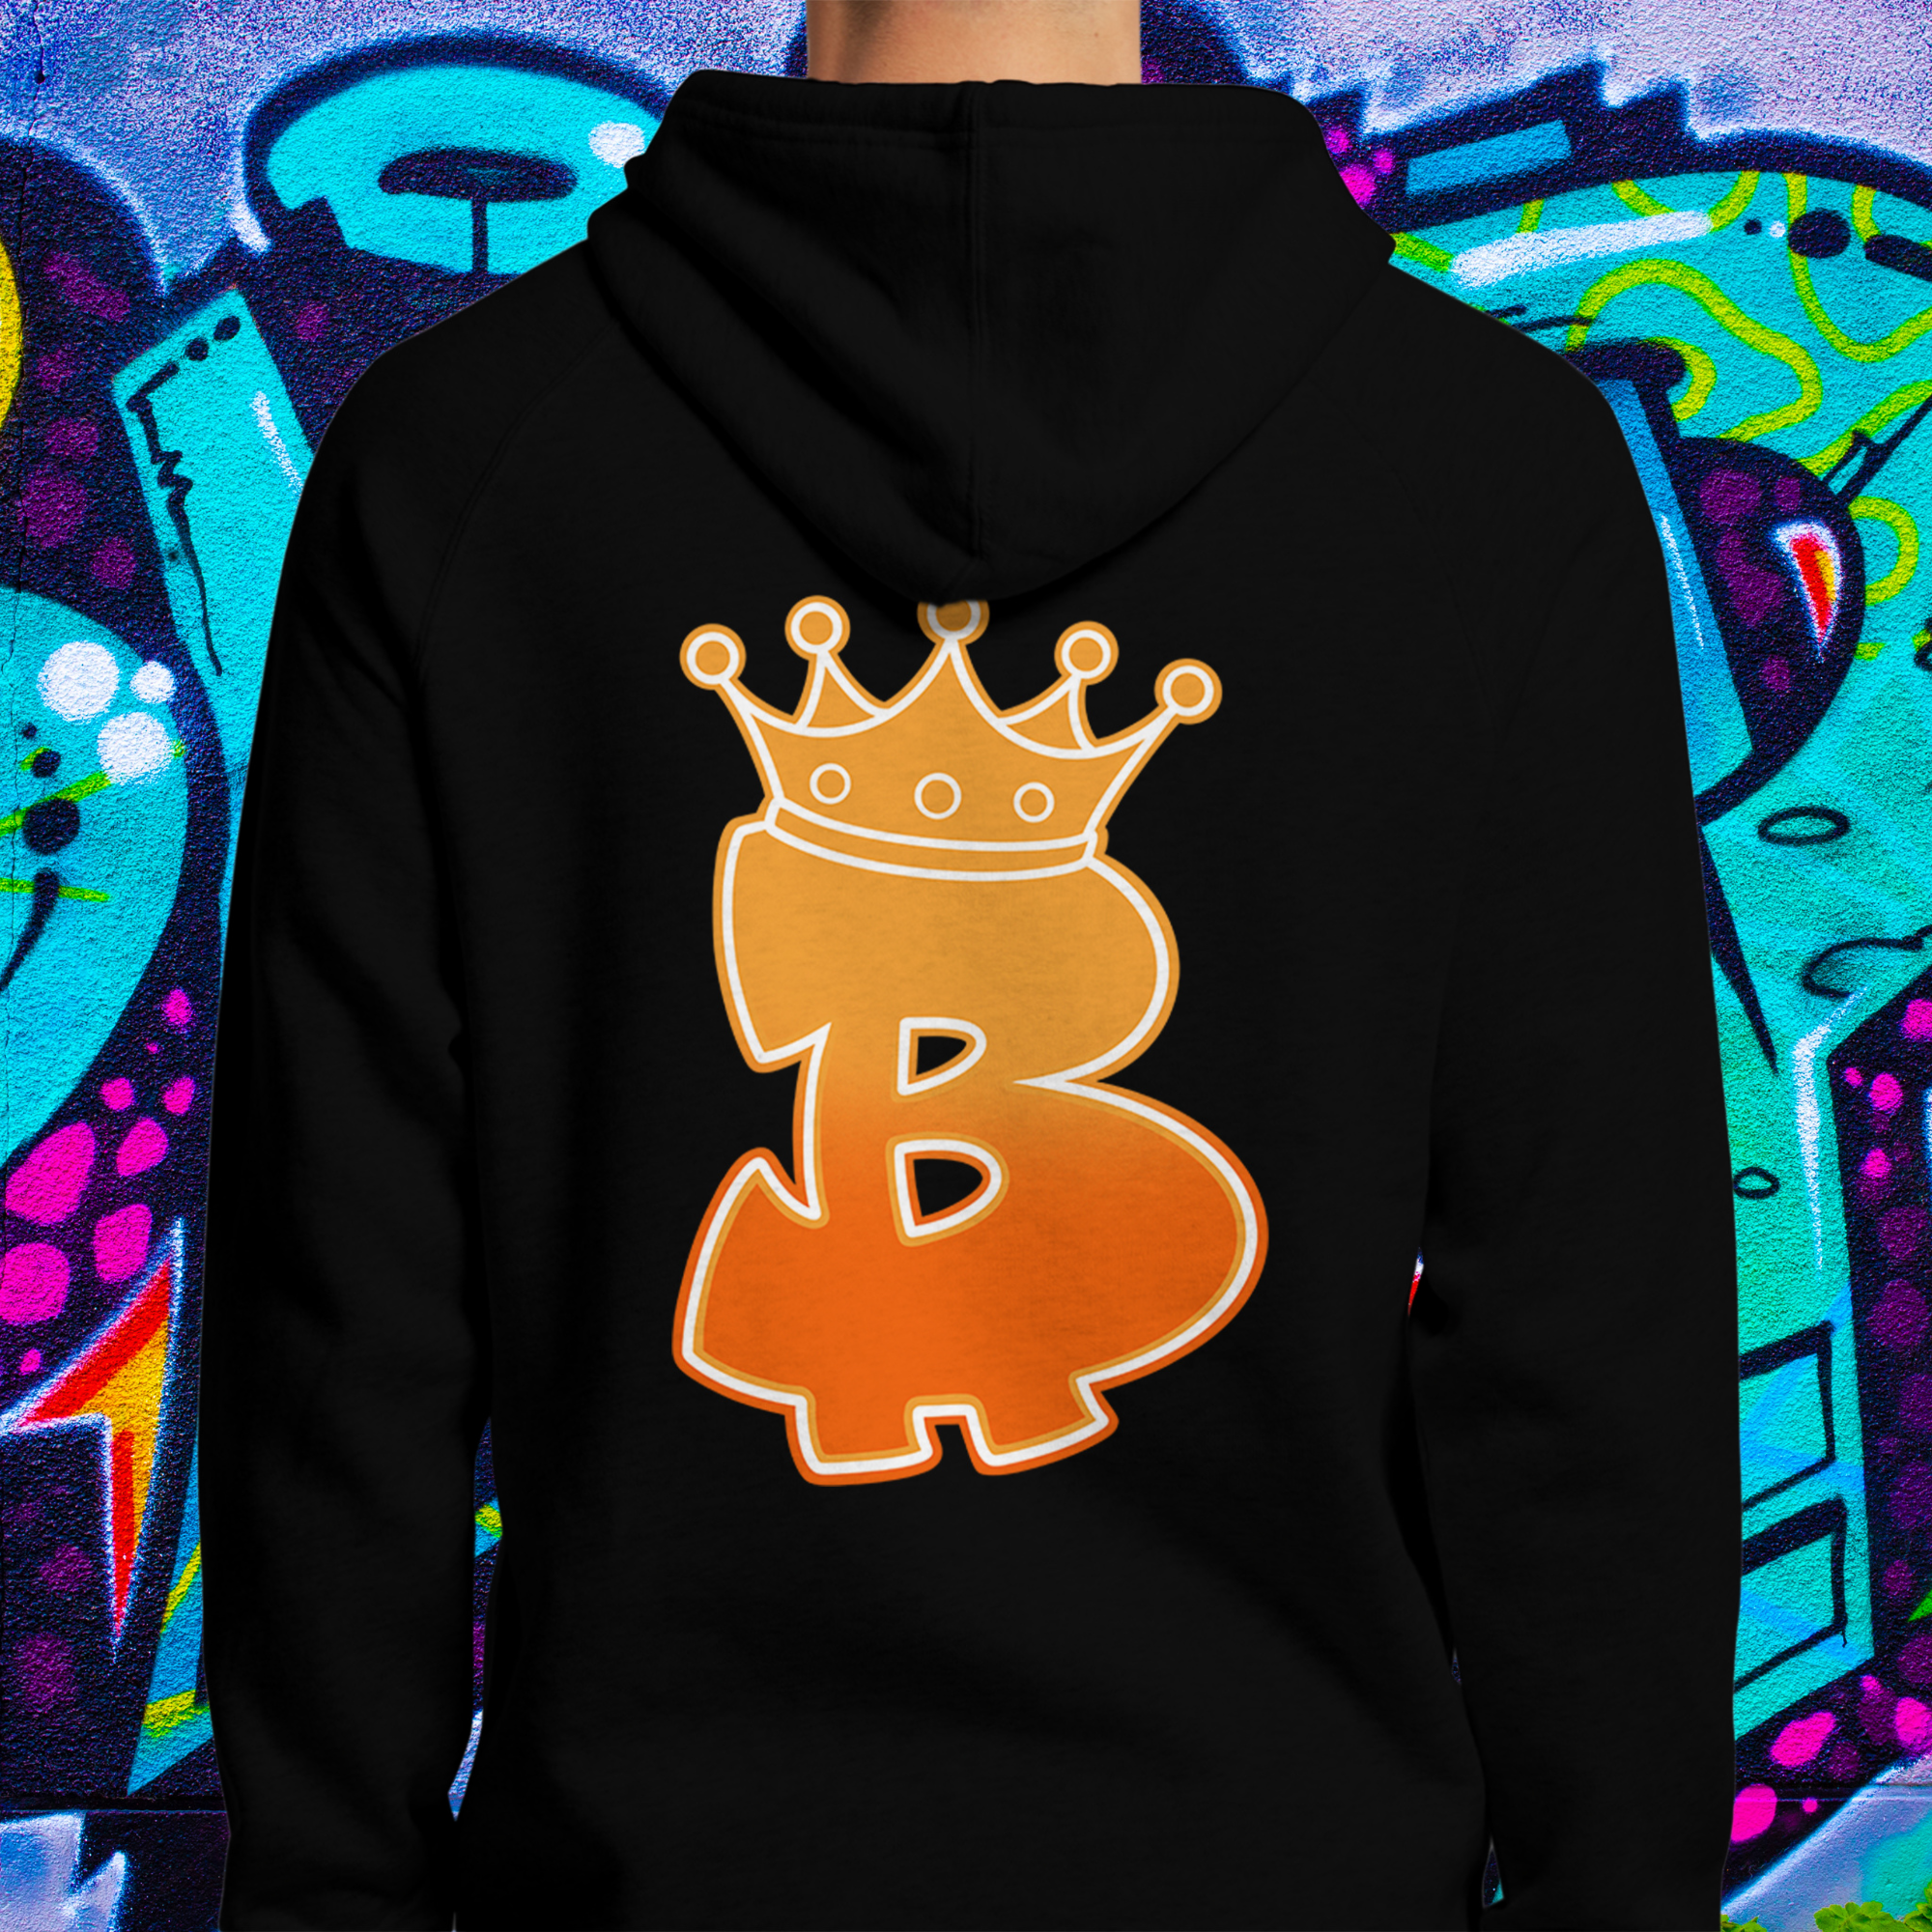 Bitcoin Clothing - Bitcoin Graffiti Hoodie. Male Model Image (back view).